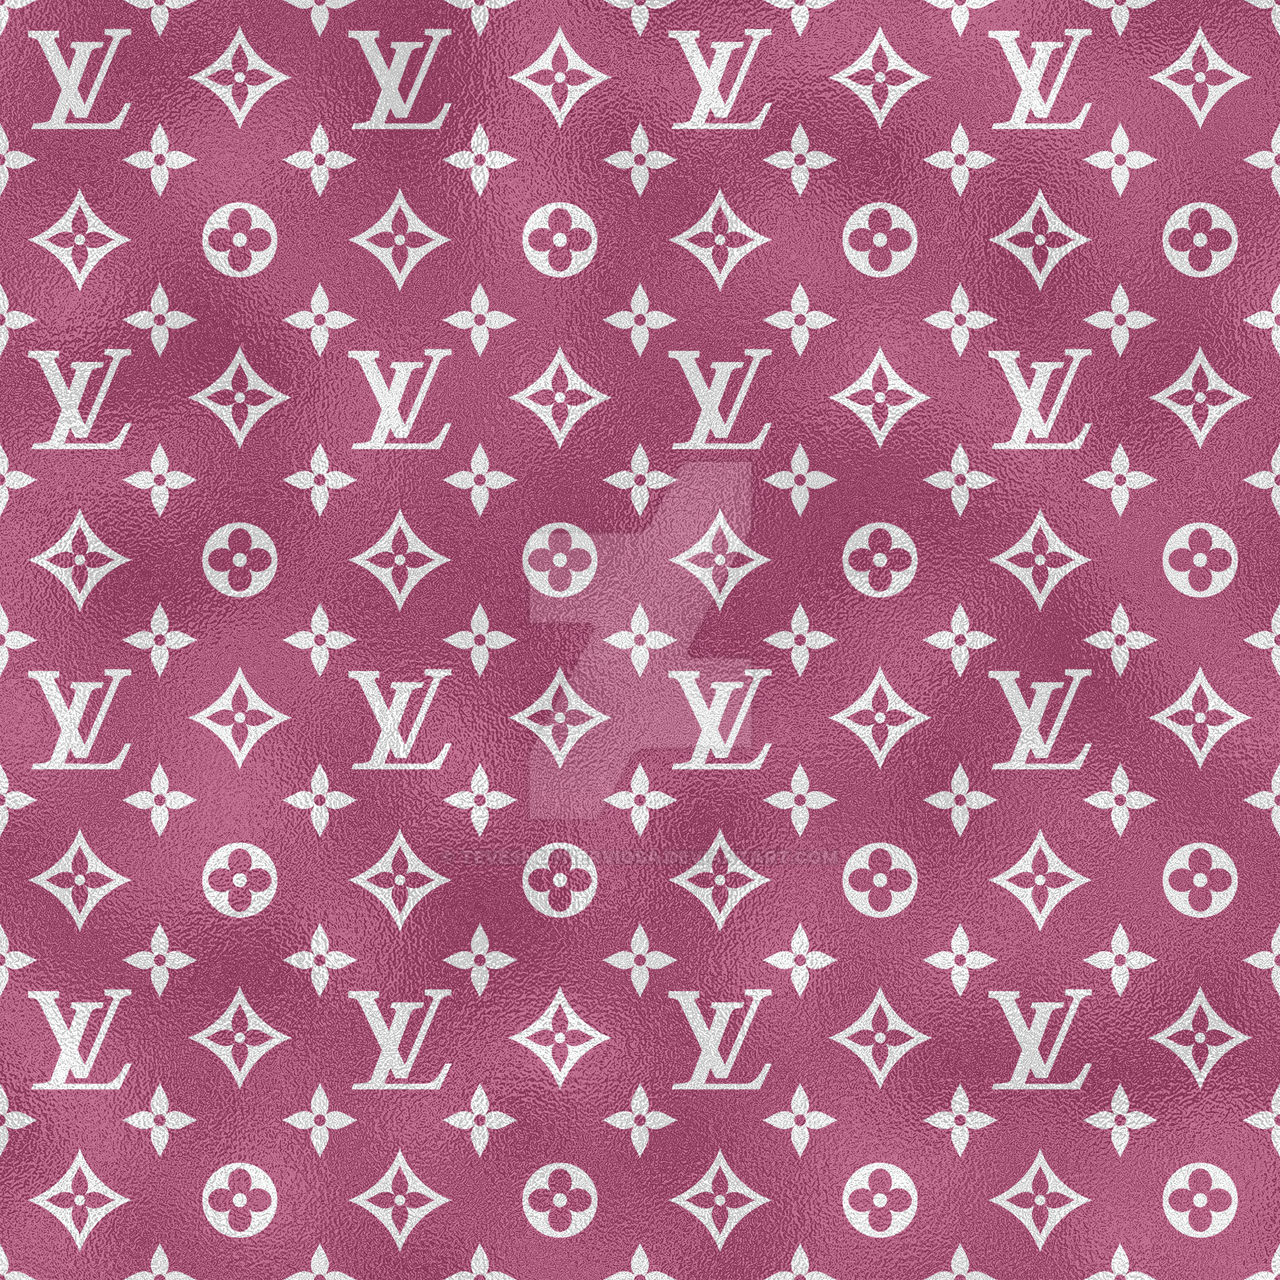 LV 2022 New Wallpaper in Pink - Free Download by TeVesMuyNerviosa